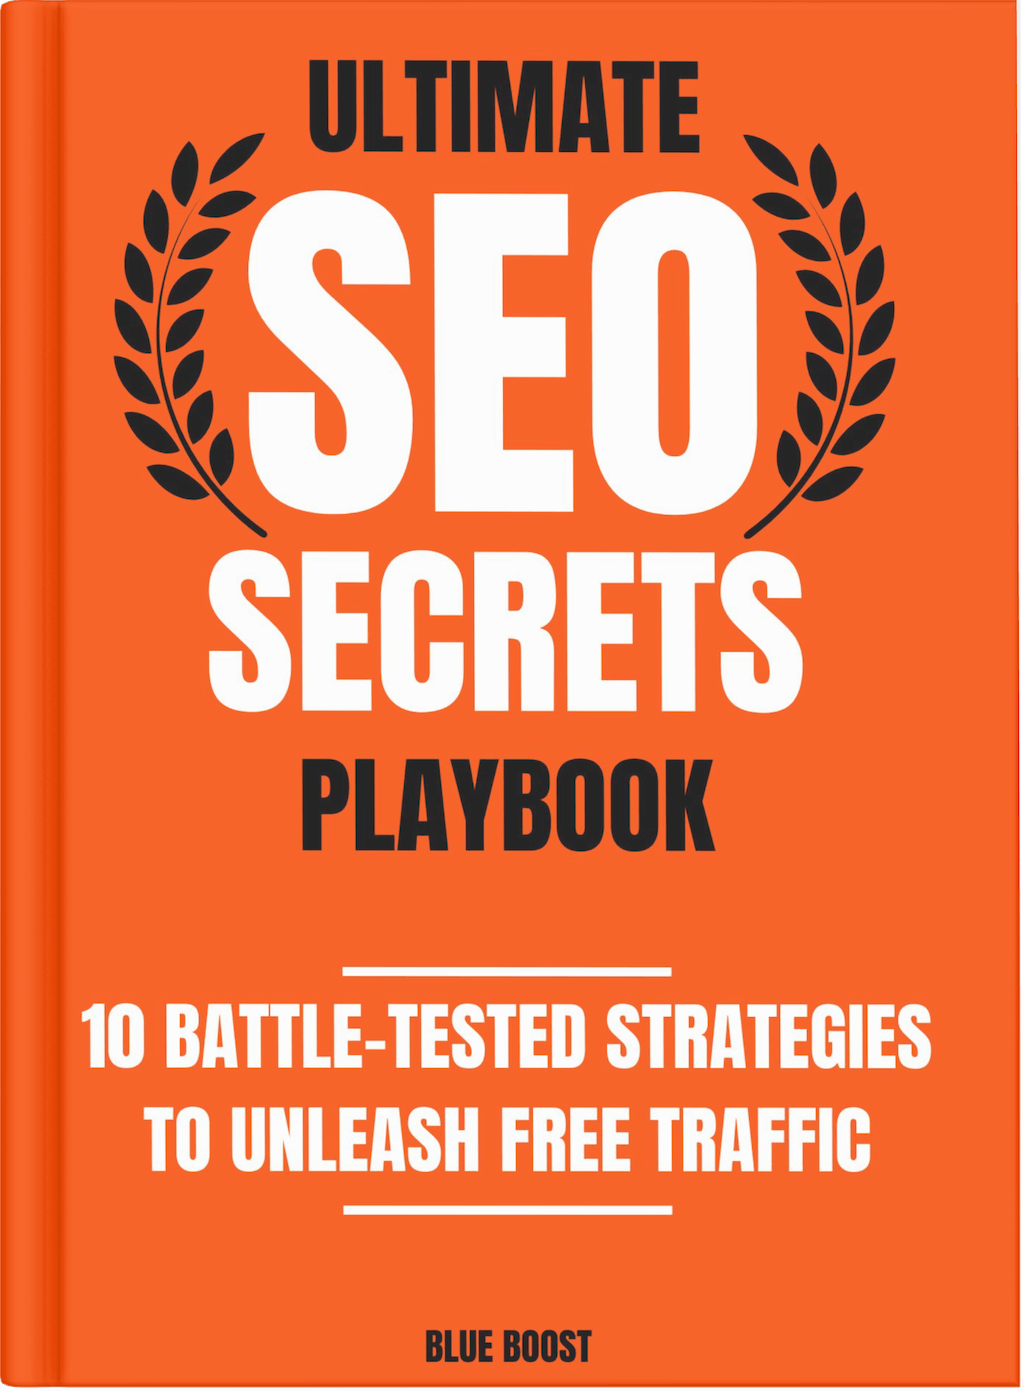 The Ultimate SEO Secrets Playbook